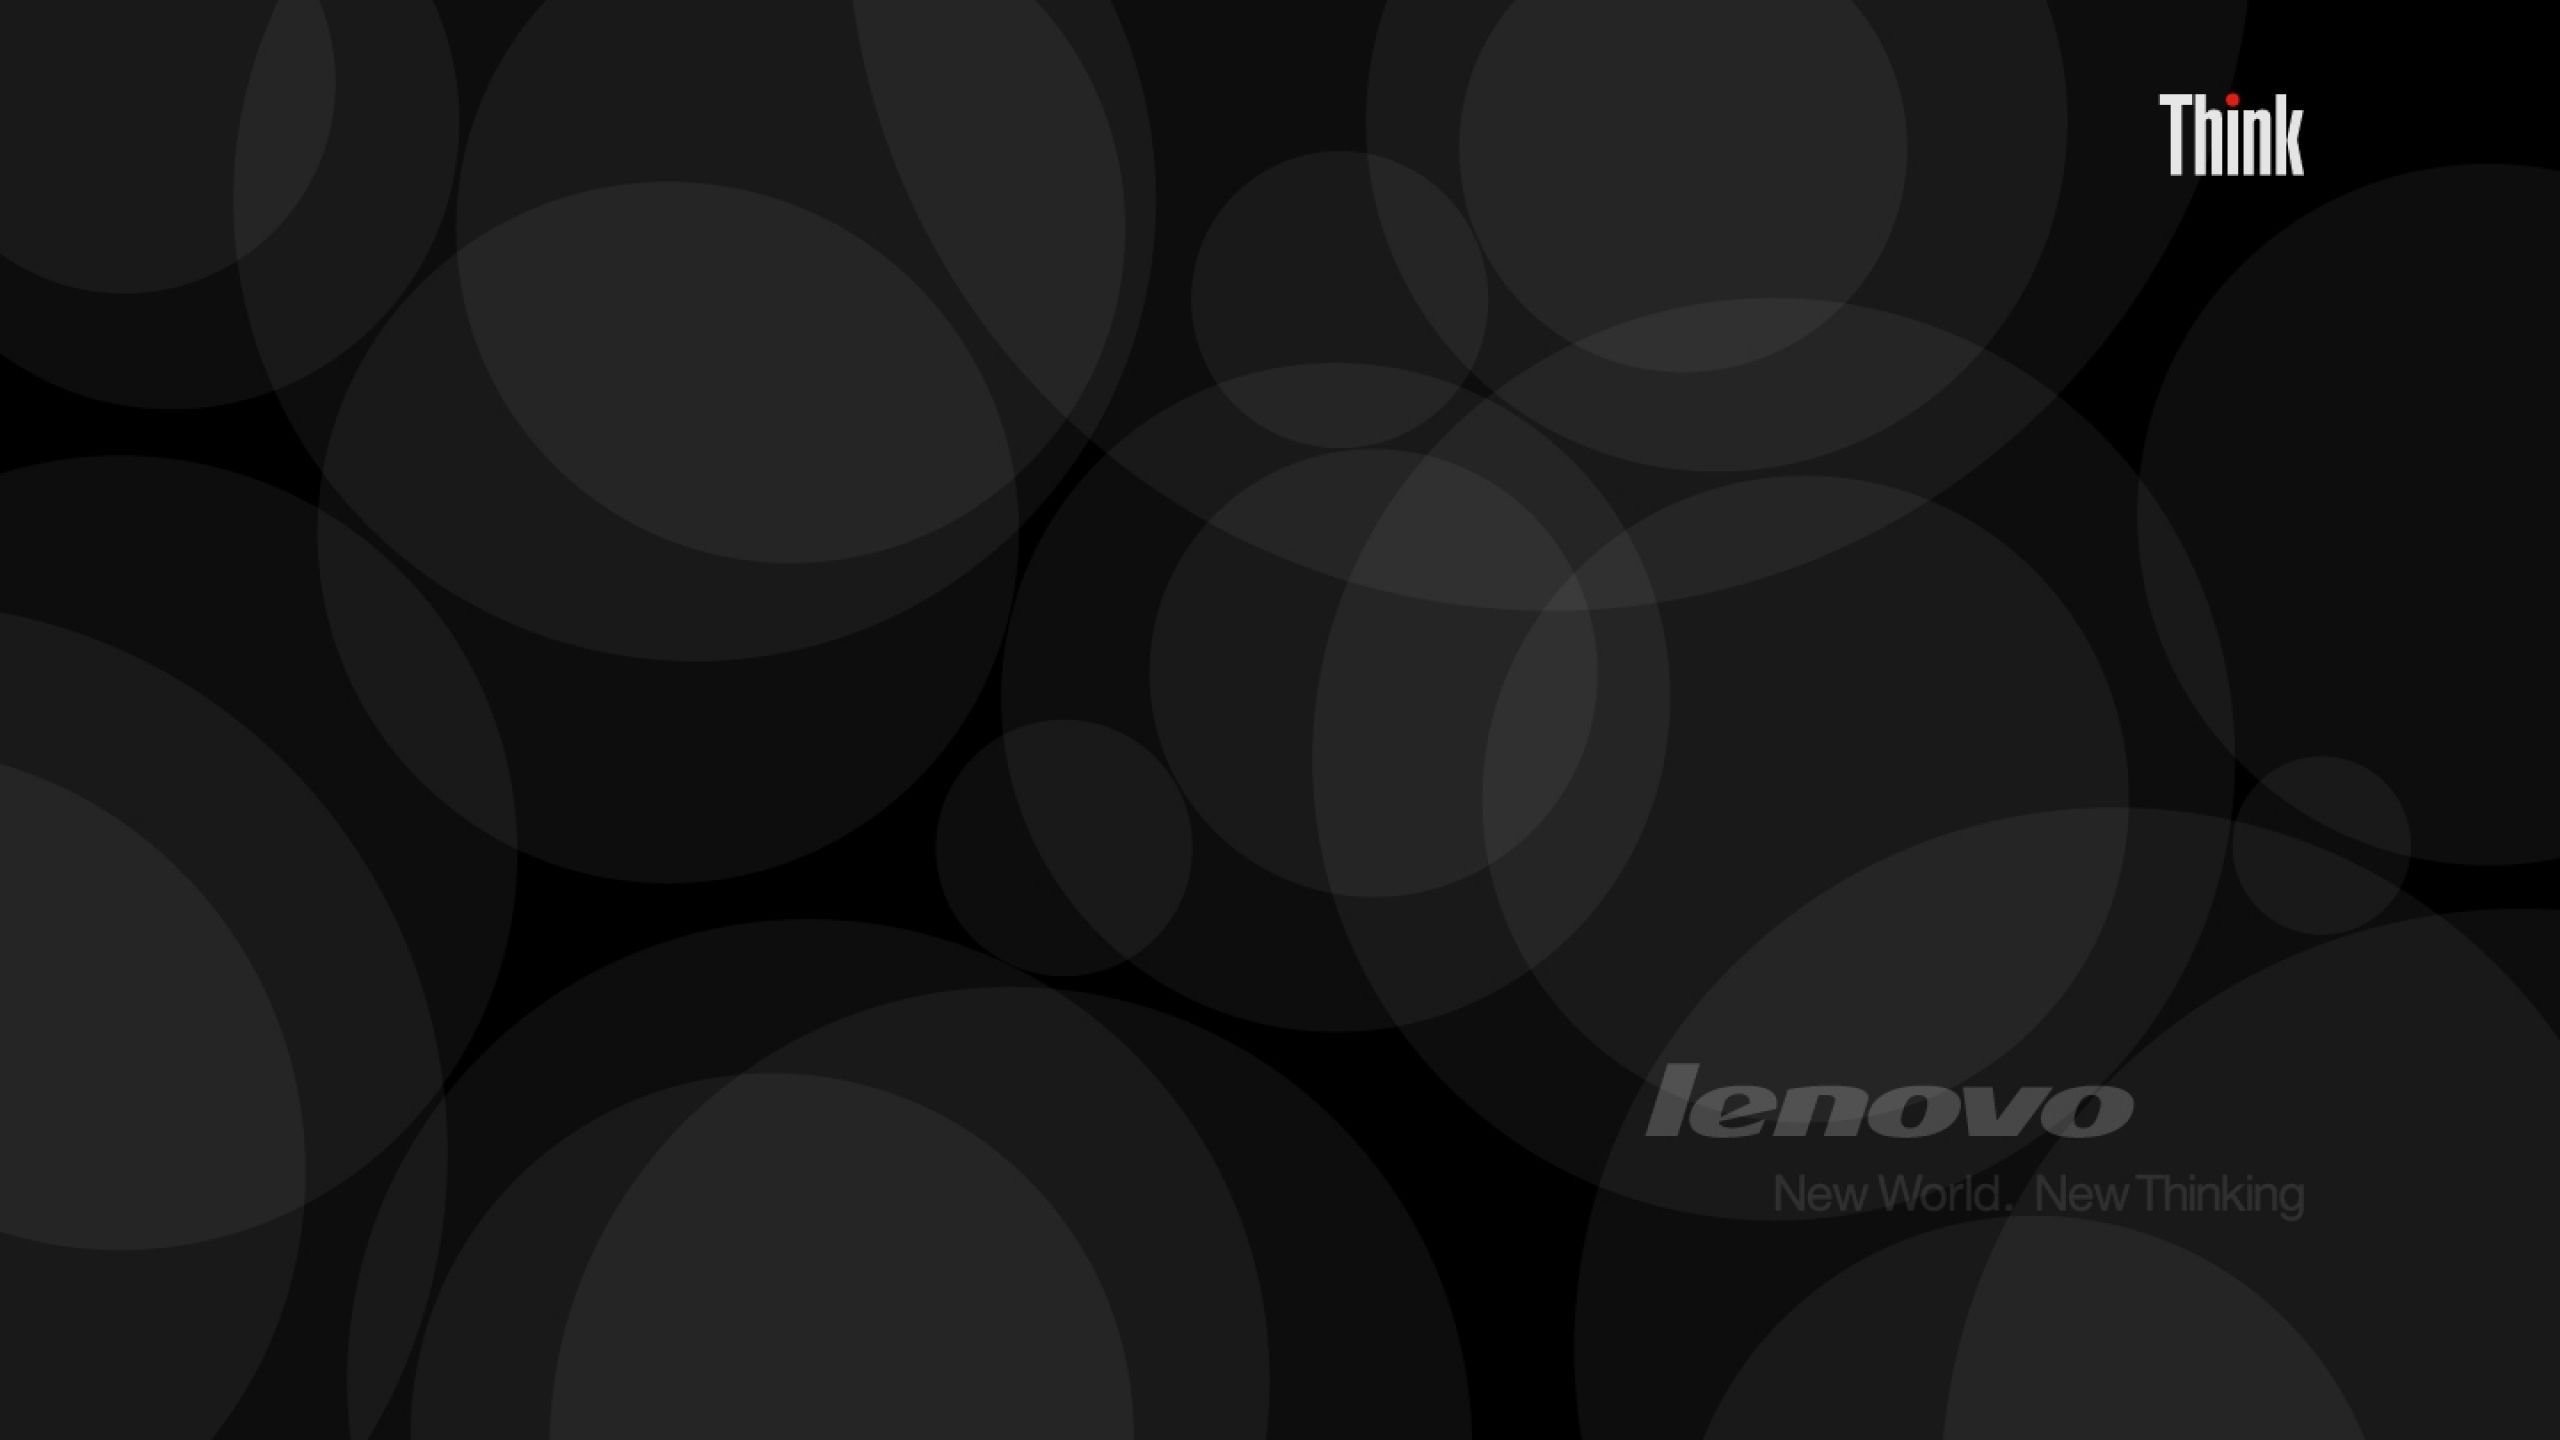 41+] Lenovo IdeaPad Wallpaper - WallpaperSafari